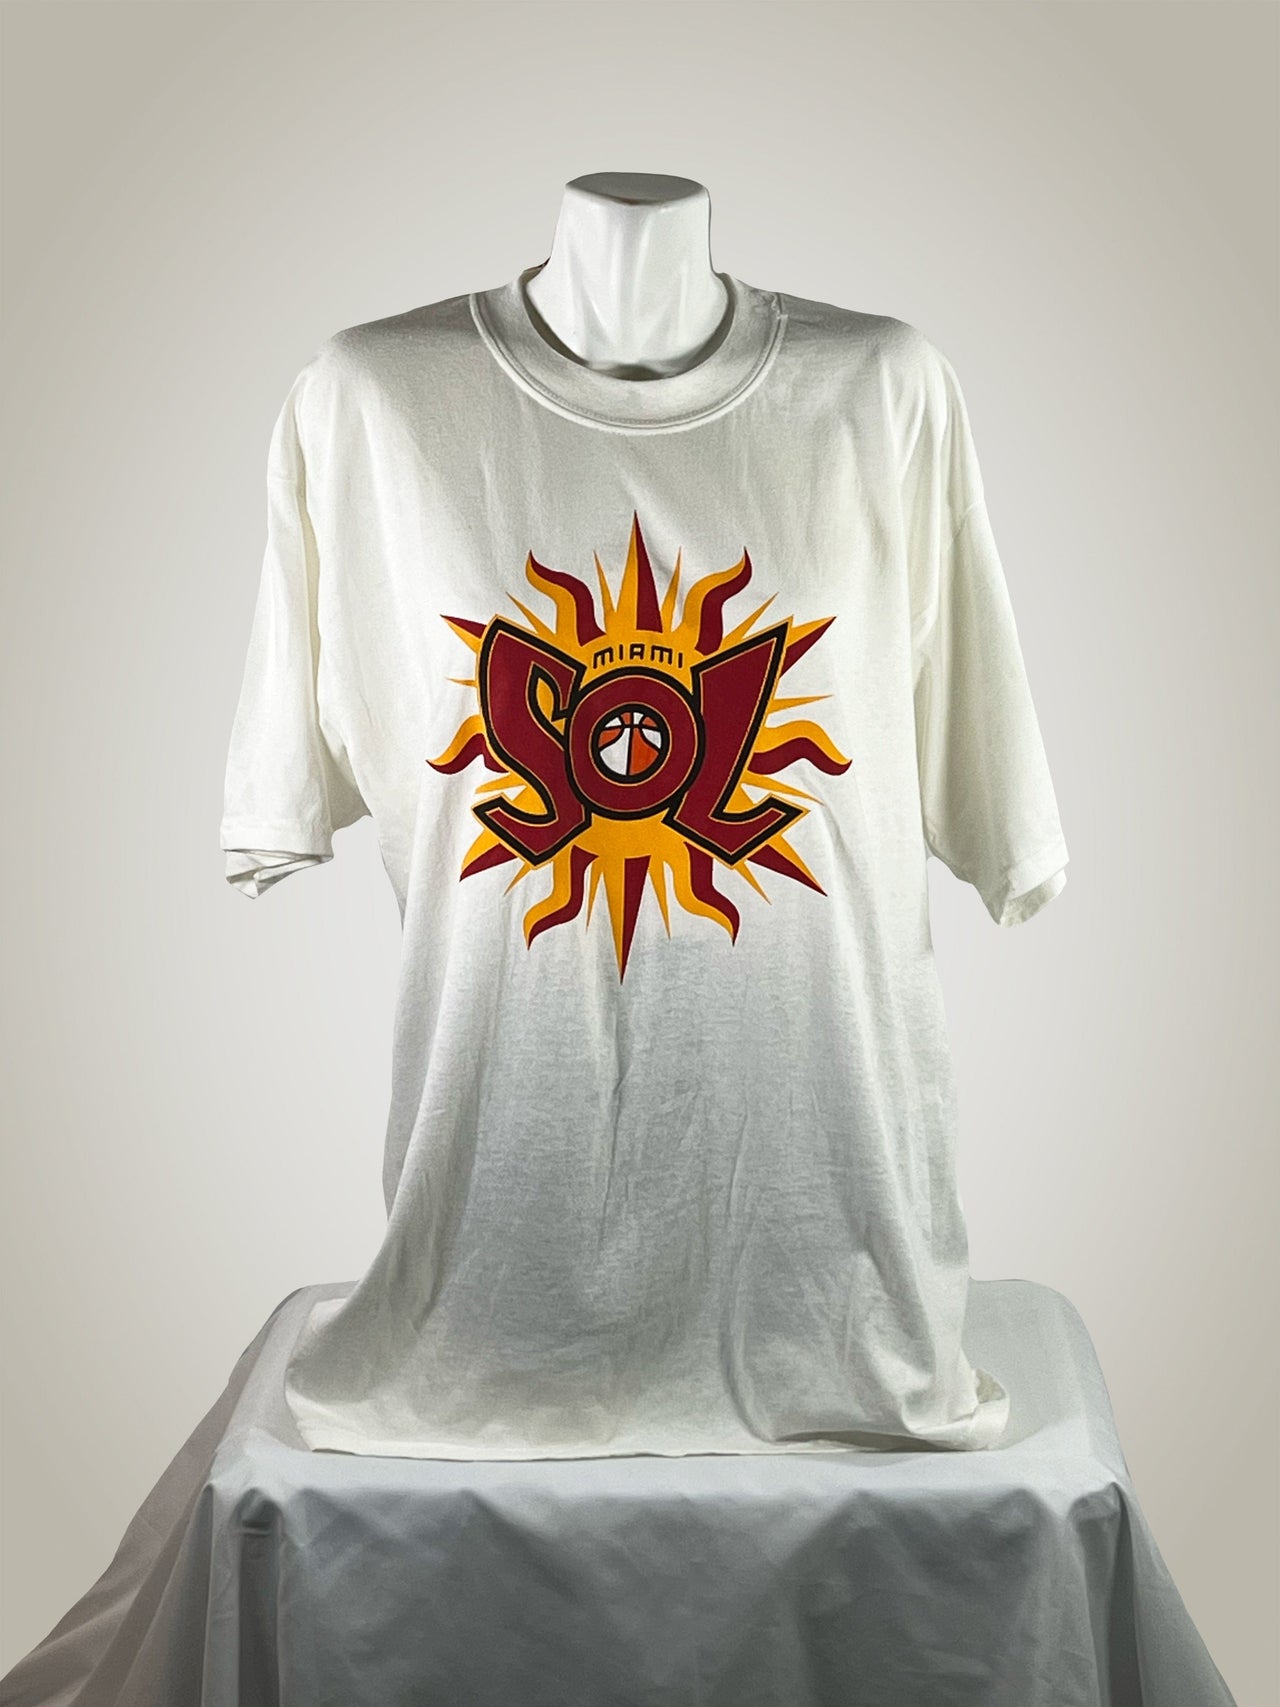 Gameday Grails T-Shirt Vintage Miami Sol T-Shirt